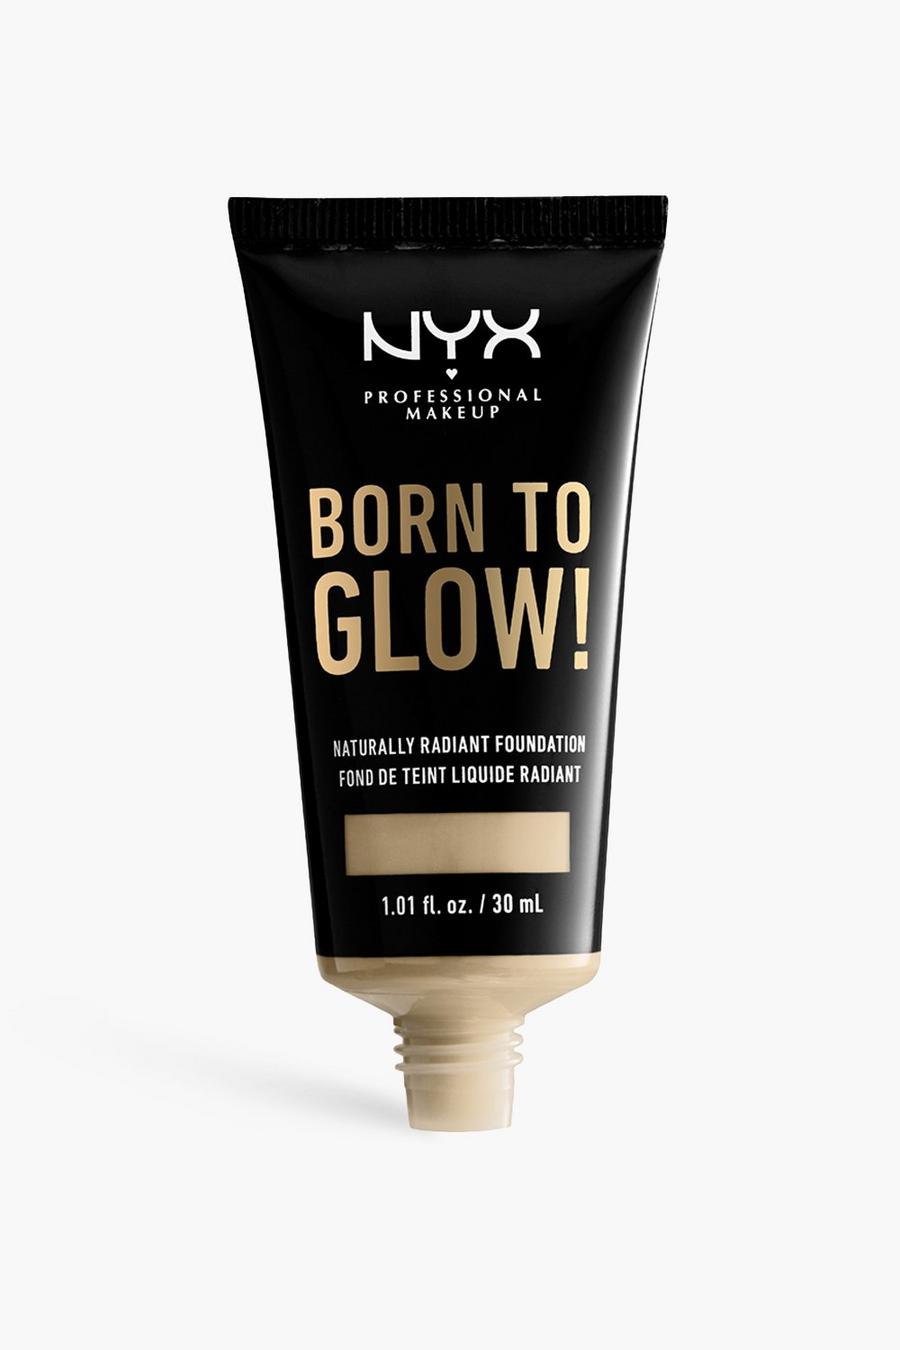 NYX Professional Makeup Born To Glow! Naturally Radiant Foundation, 03 warm vanilla